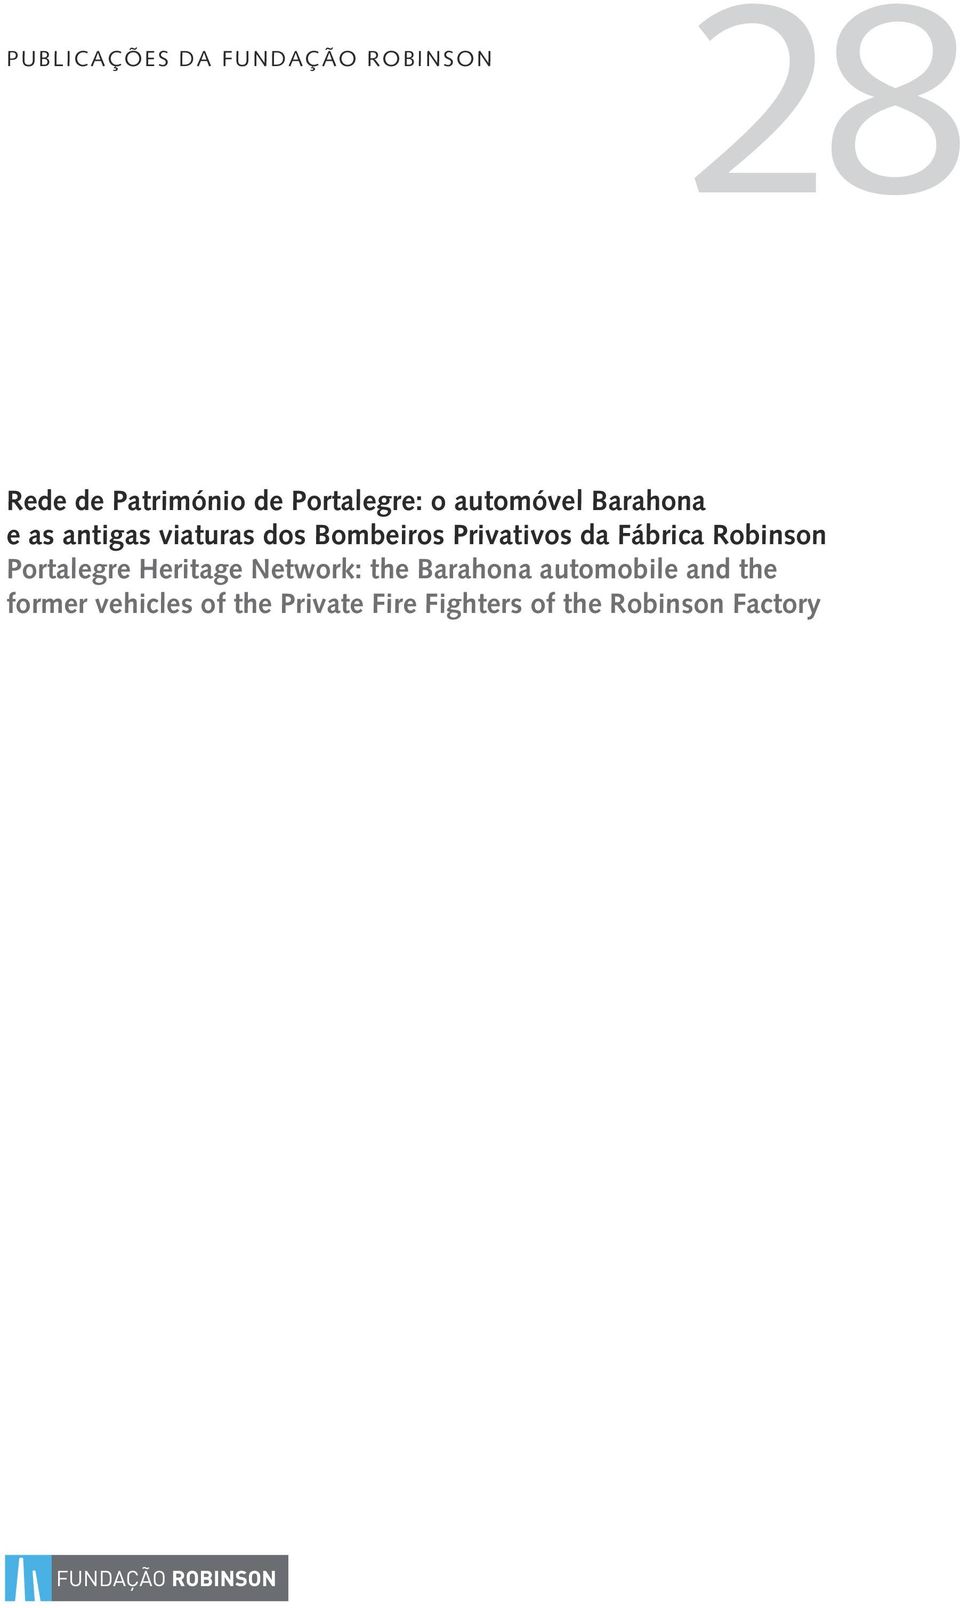 Fábrica Robinson Portalegre Heritage Network: the Barahona automobile